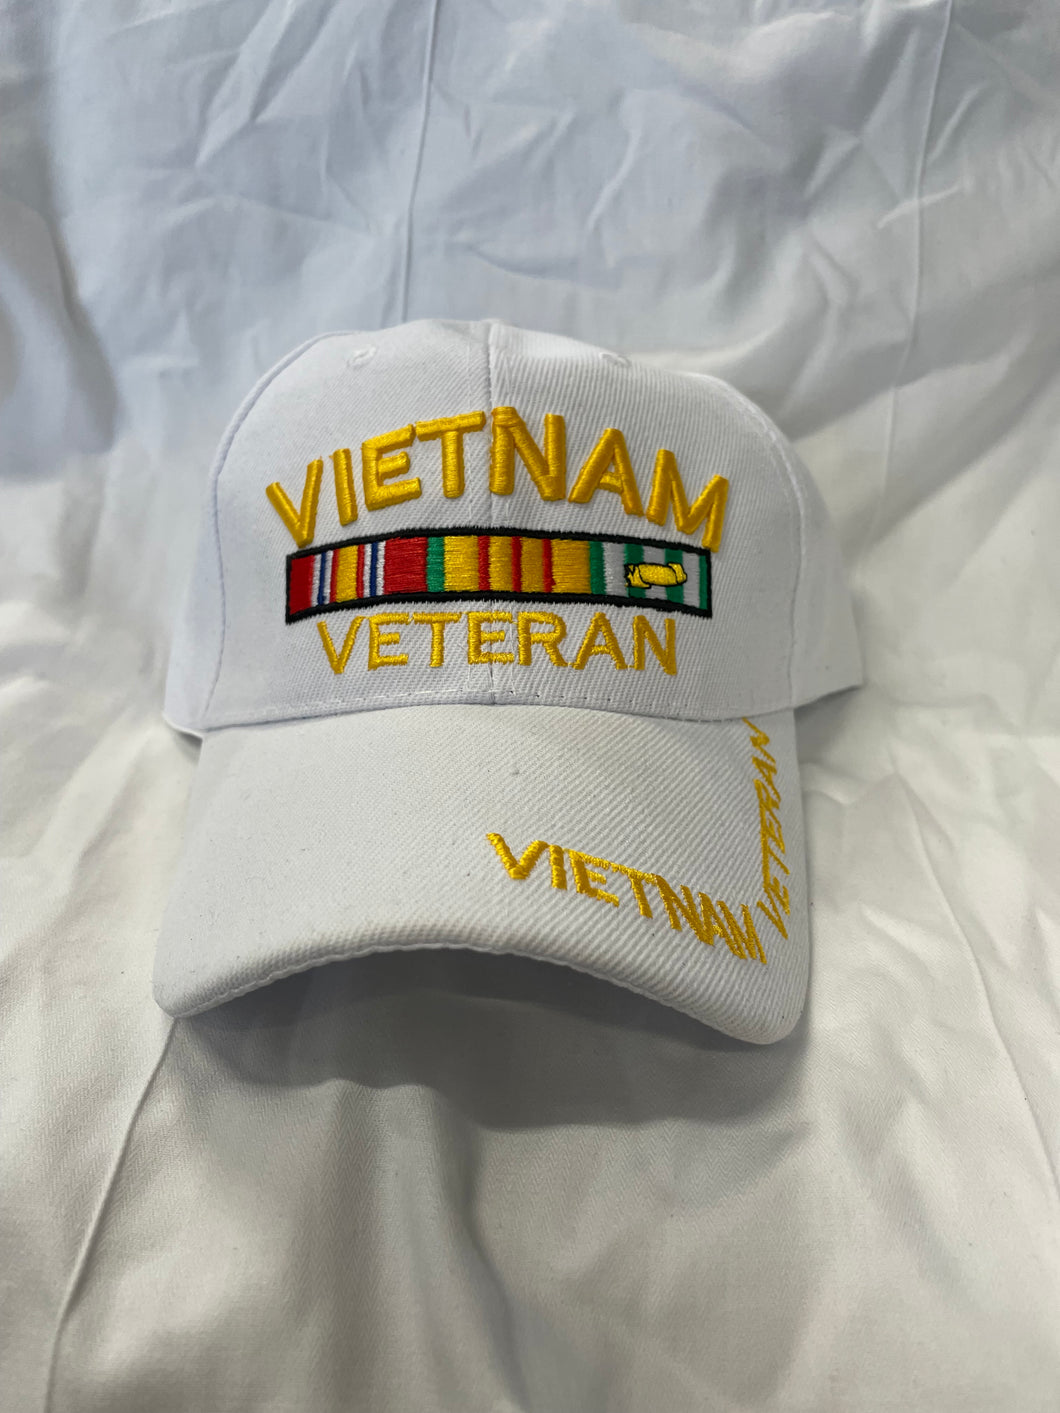 FRONT VIEW OF WHITE VIETNAM VETERAN HAT